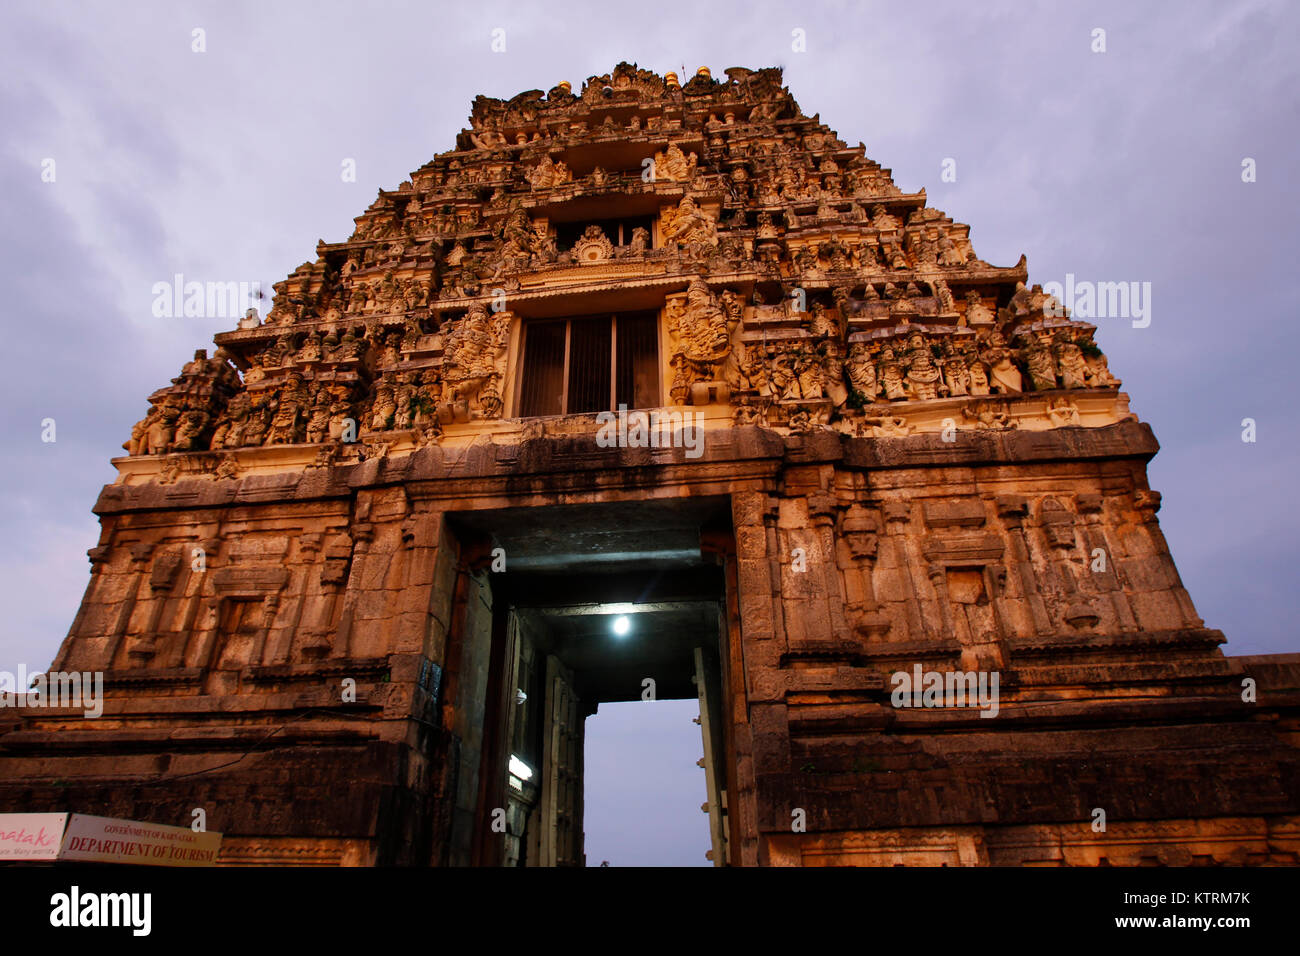 Entrance of Chennakeshava Temple at Belur town, Karnataka, India Stock Photo